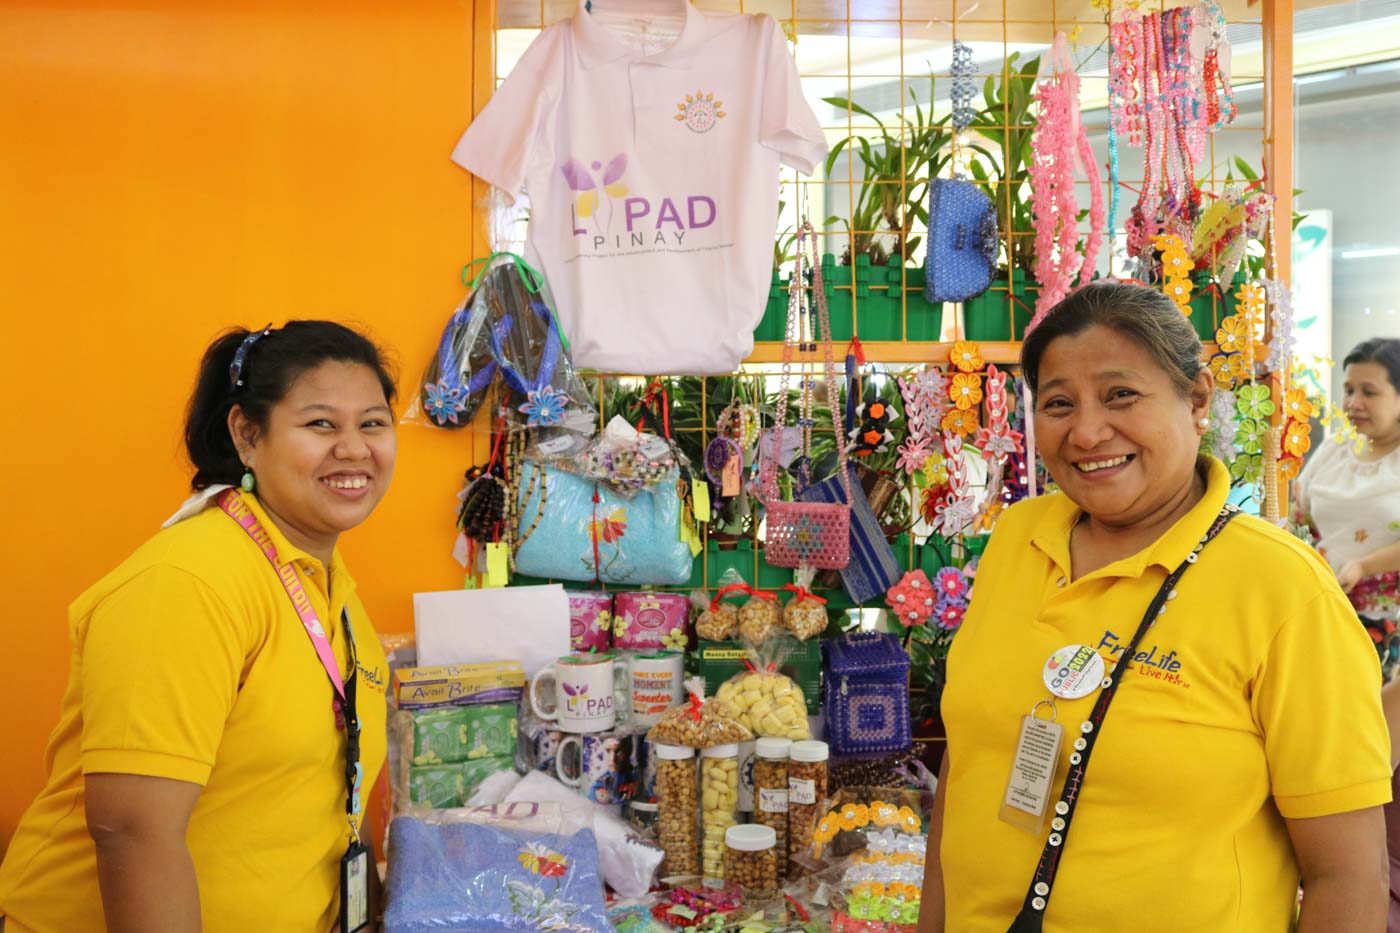 LIPAD Pinay: Women uplifting women through micro-entrepreneurship